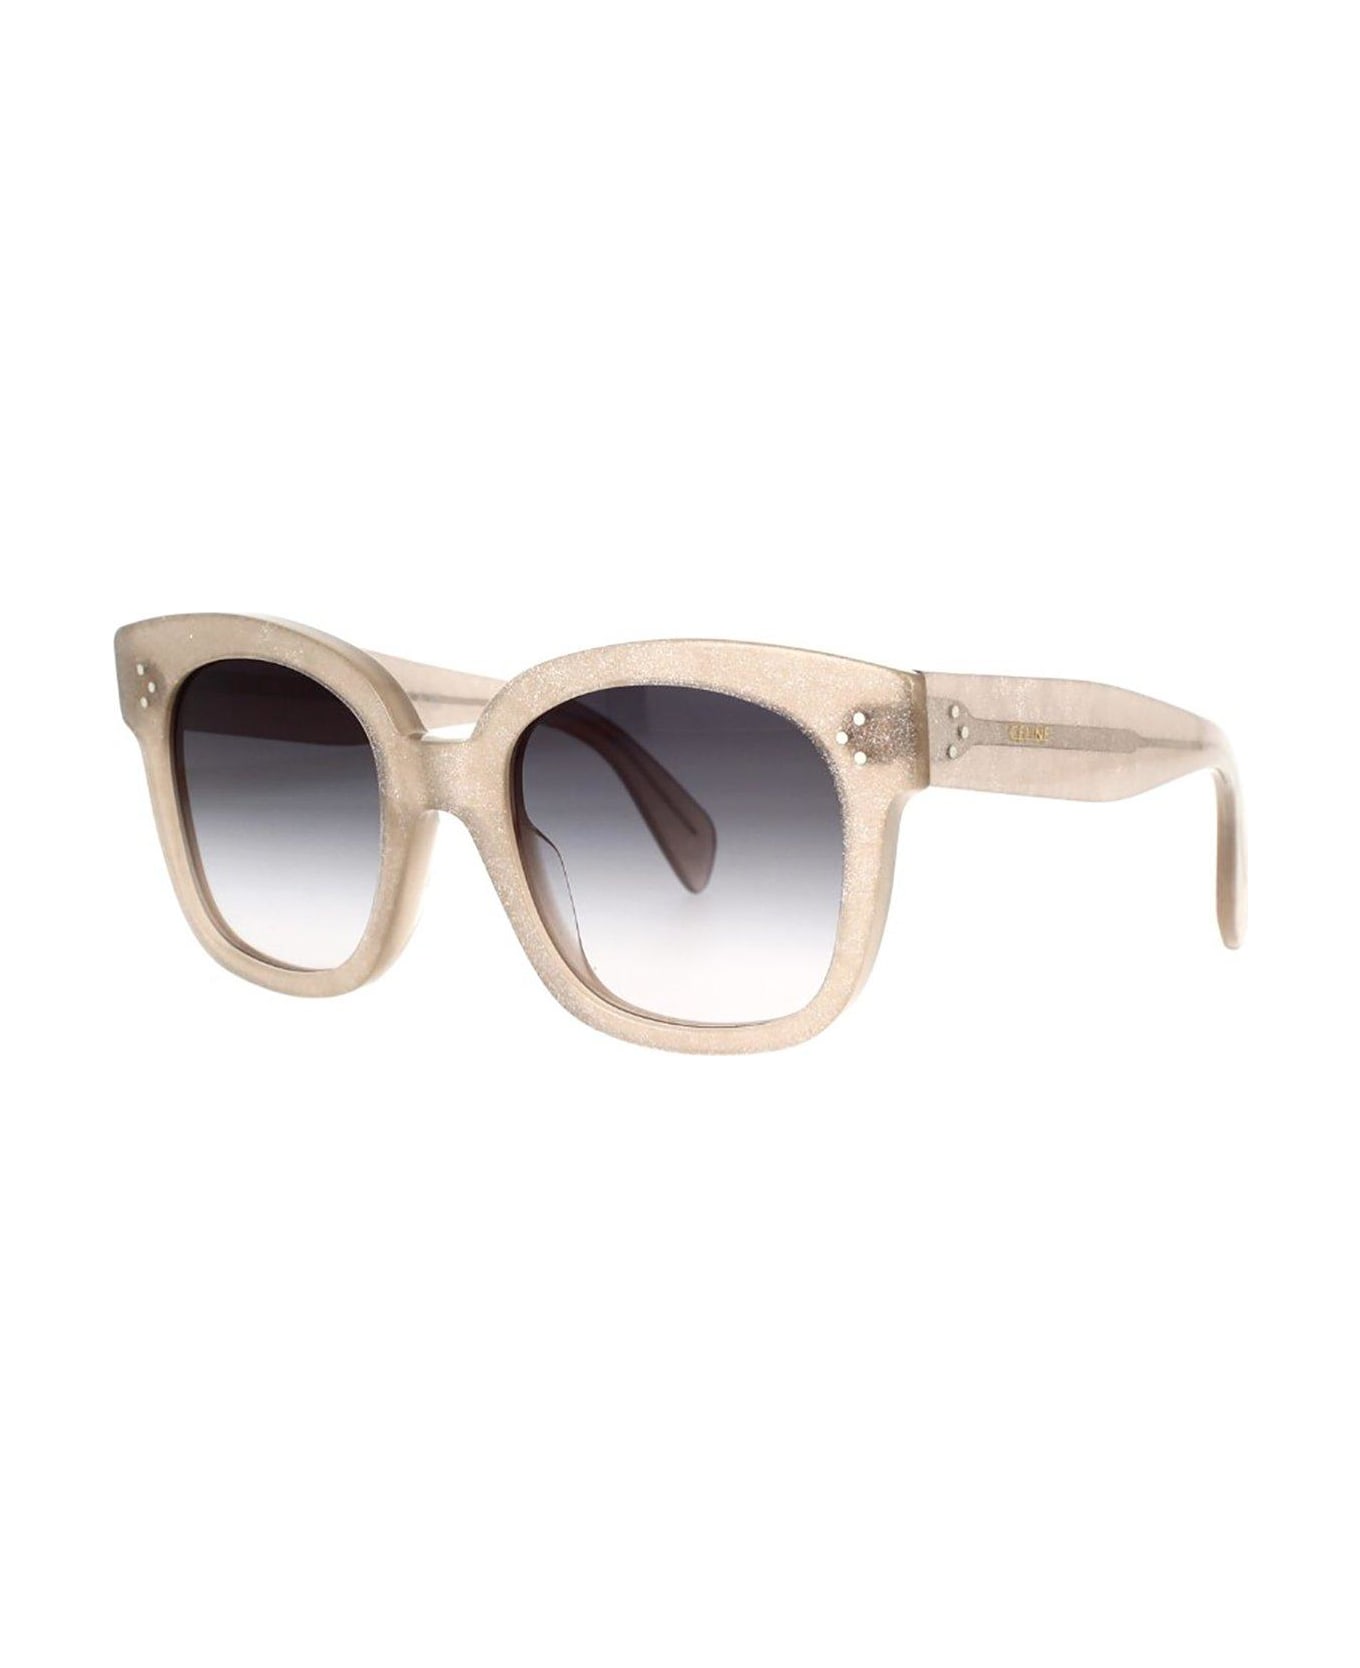 Celine Square Frame Sunglasses - 20b サングラス